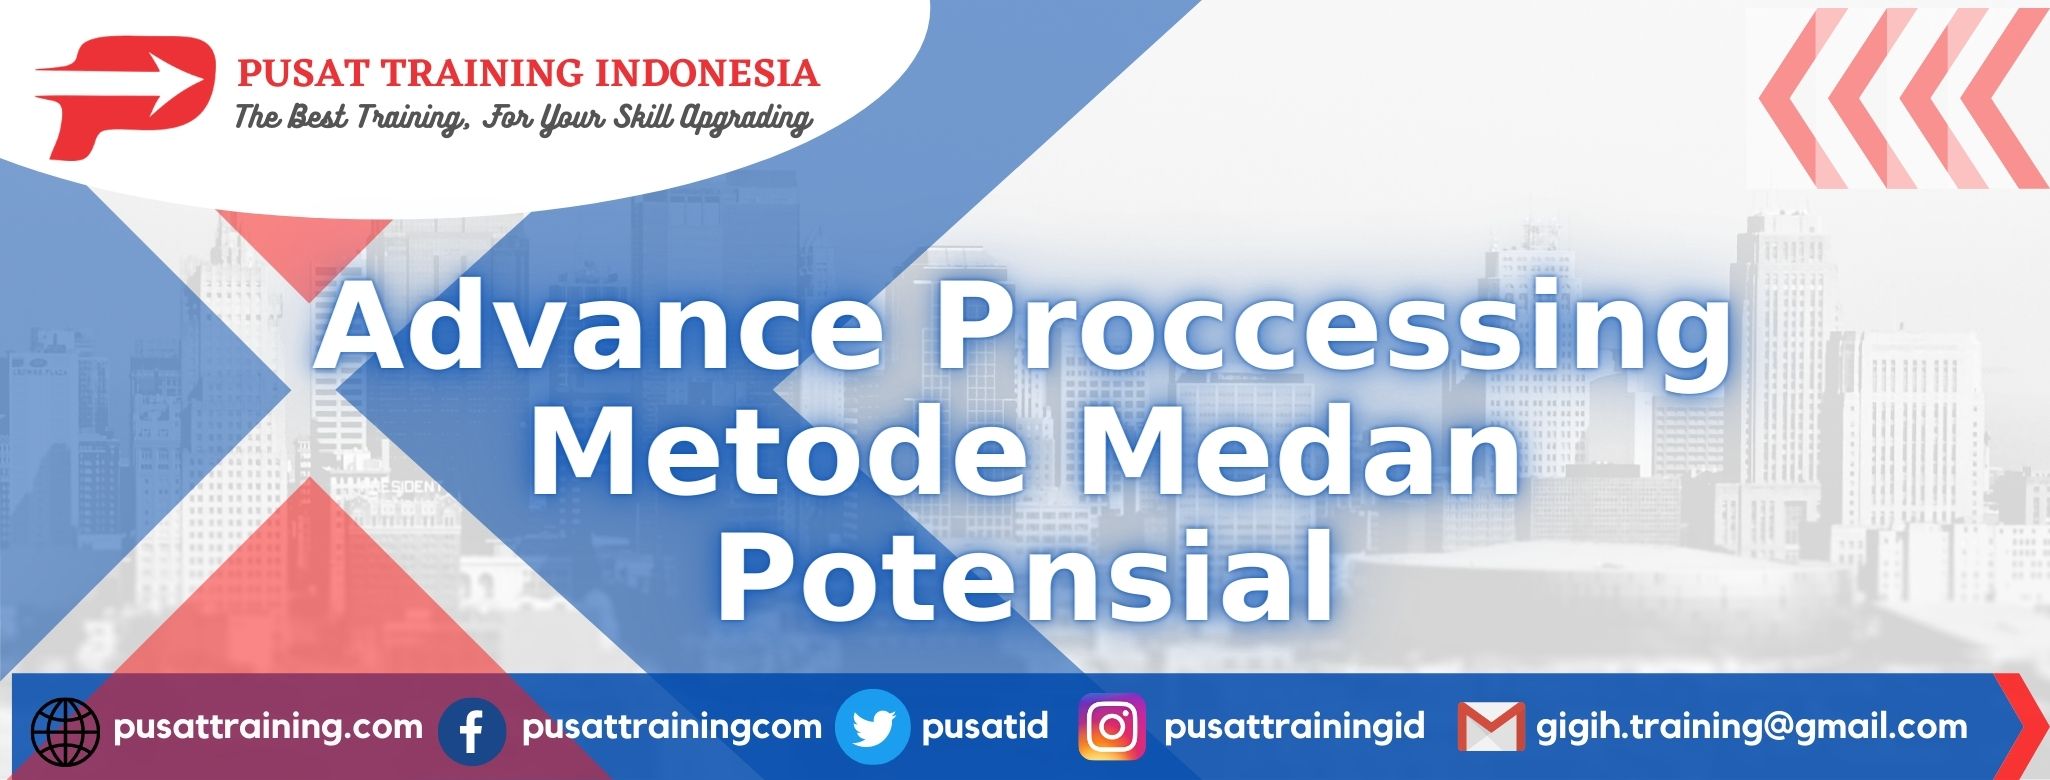 Advance-Proccessing-Metode-Medan-Potensial